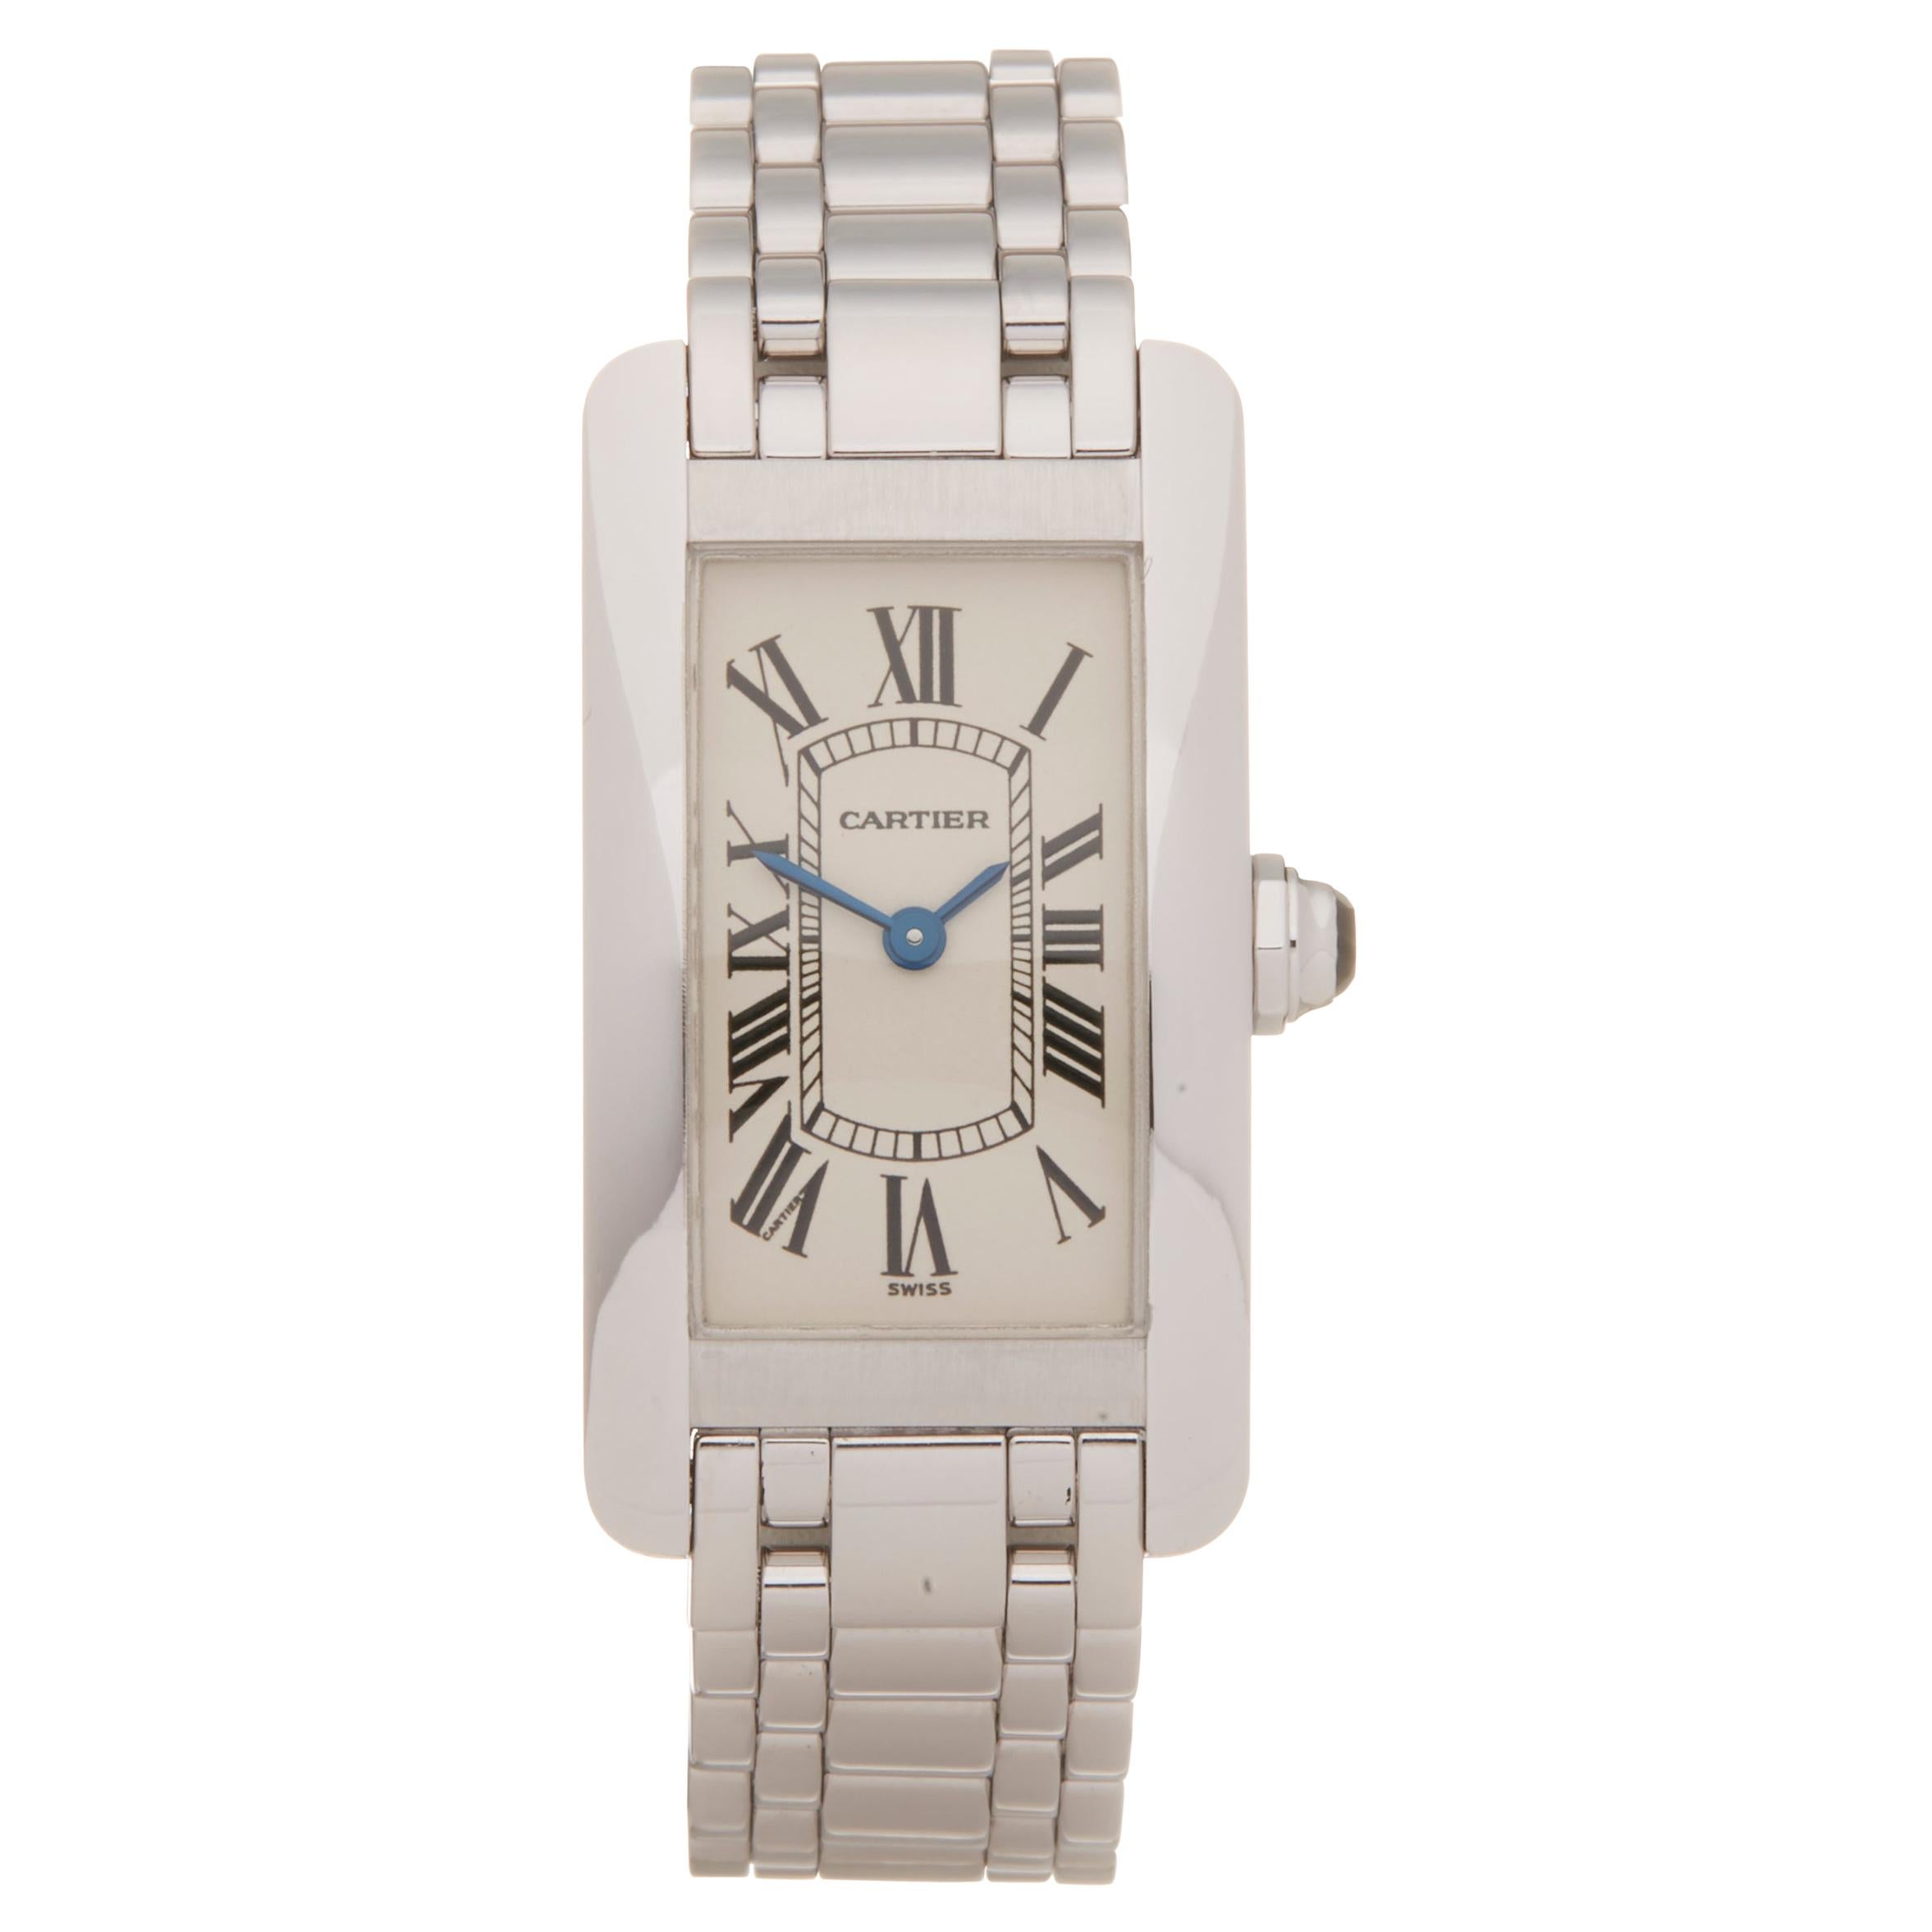 Cartier Tank Americaine 18 Karat White Gold W26019l1 or 1713 Wristwatch